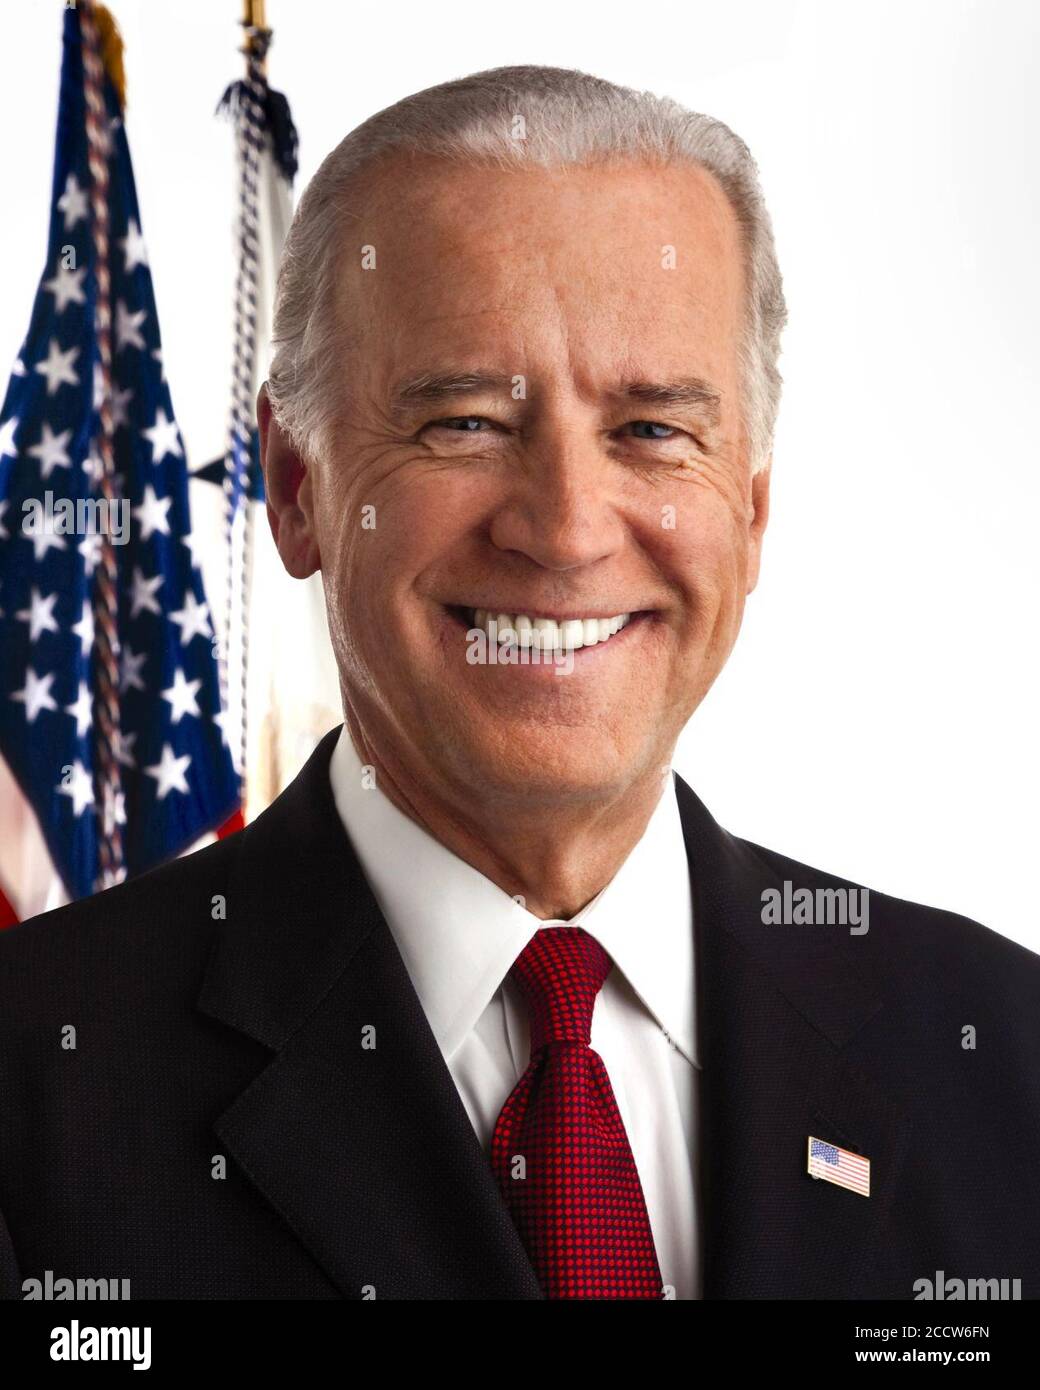 Joe Biden official portrait crop. Stock Photo